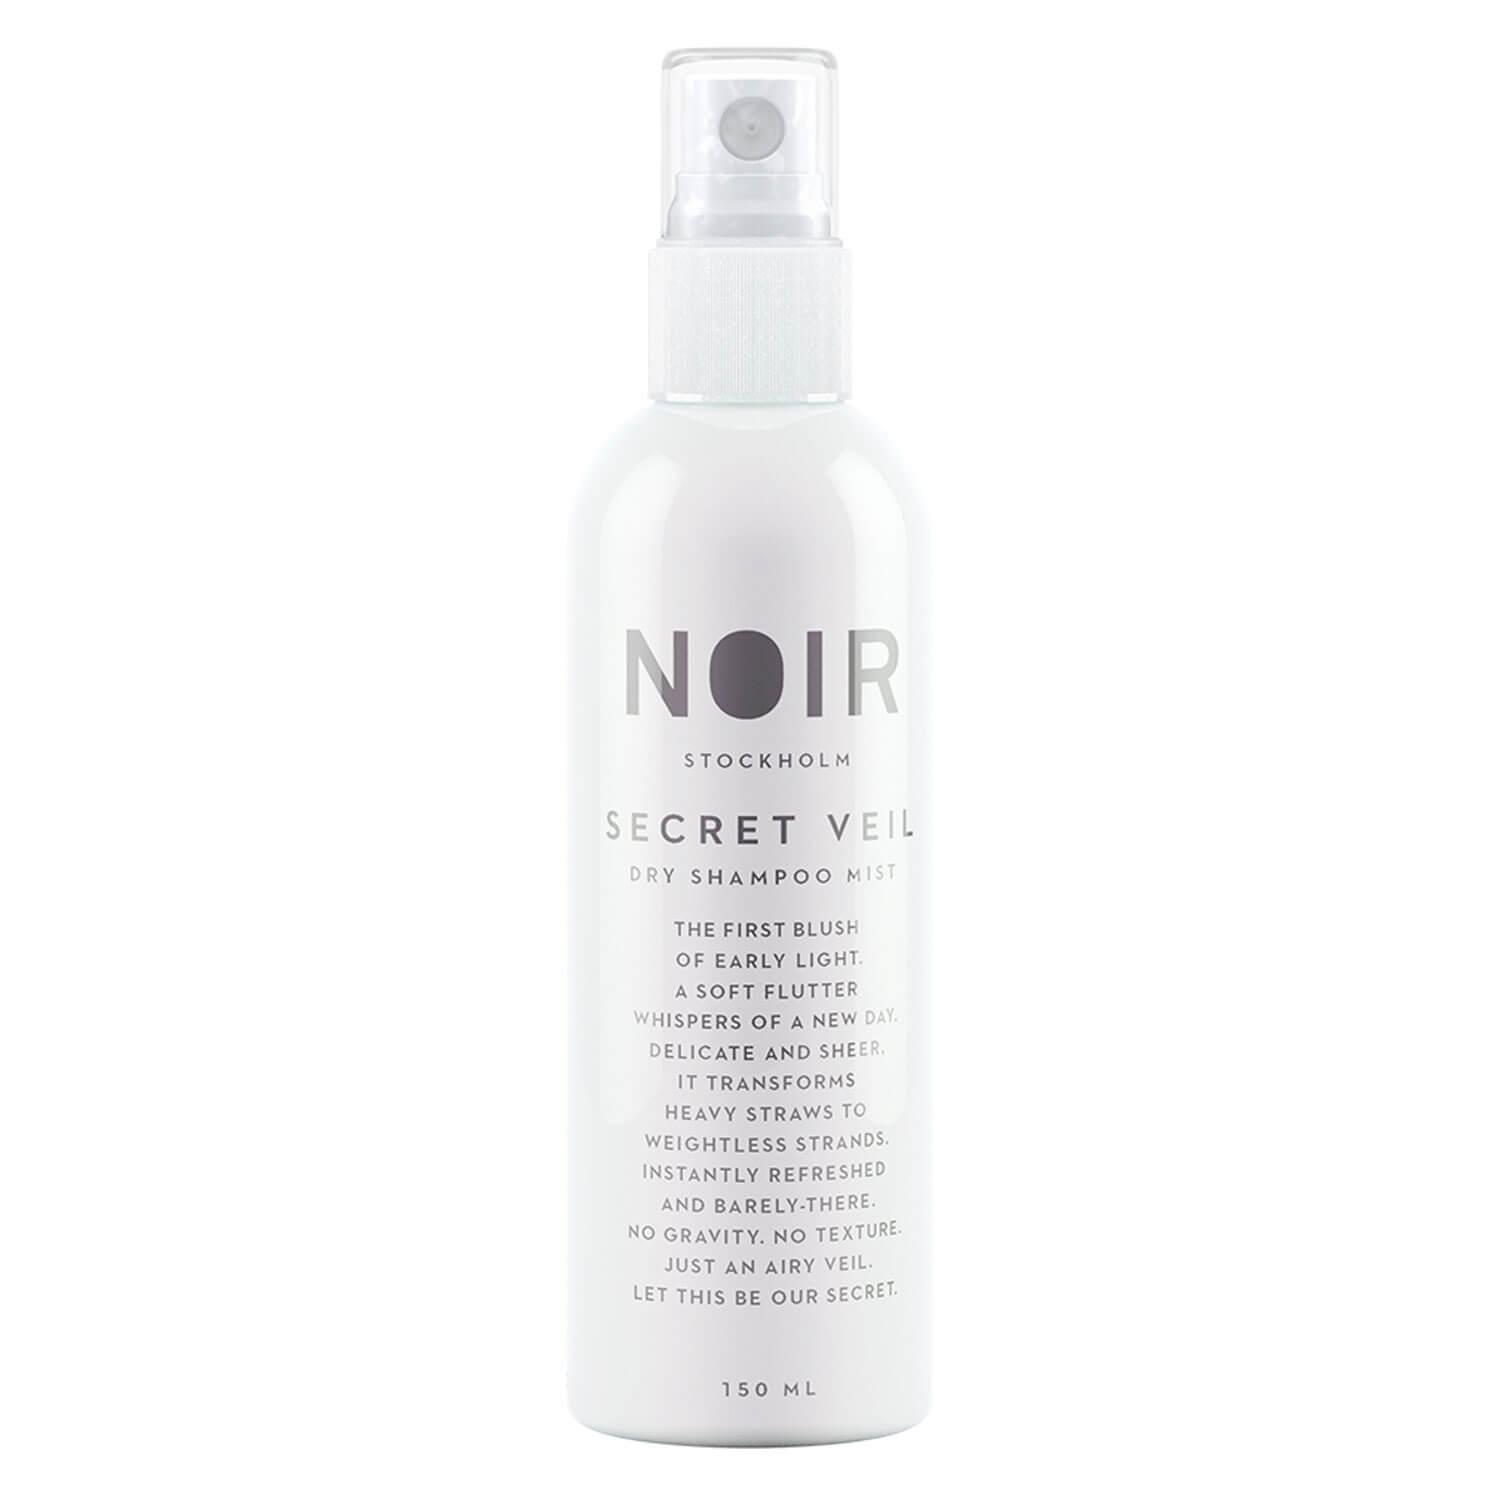 NOIR - Secret Veil Dry Shampoo Mist